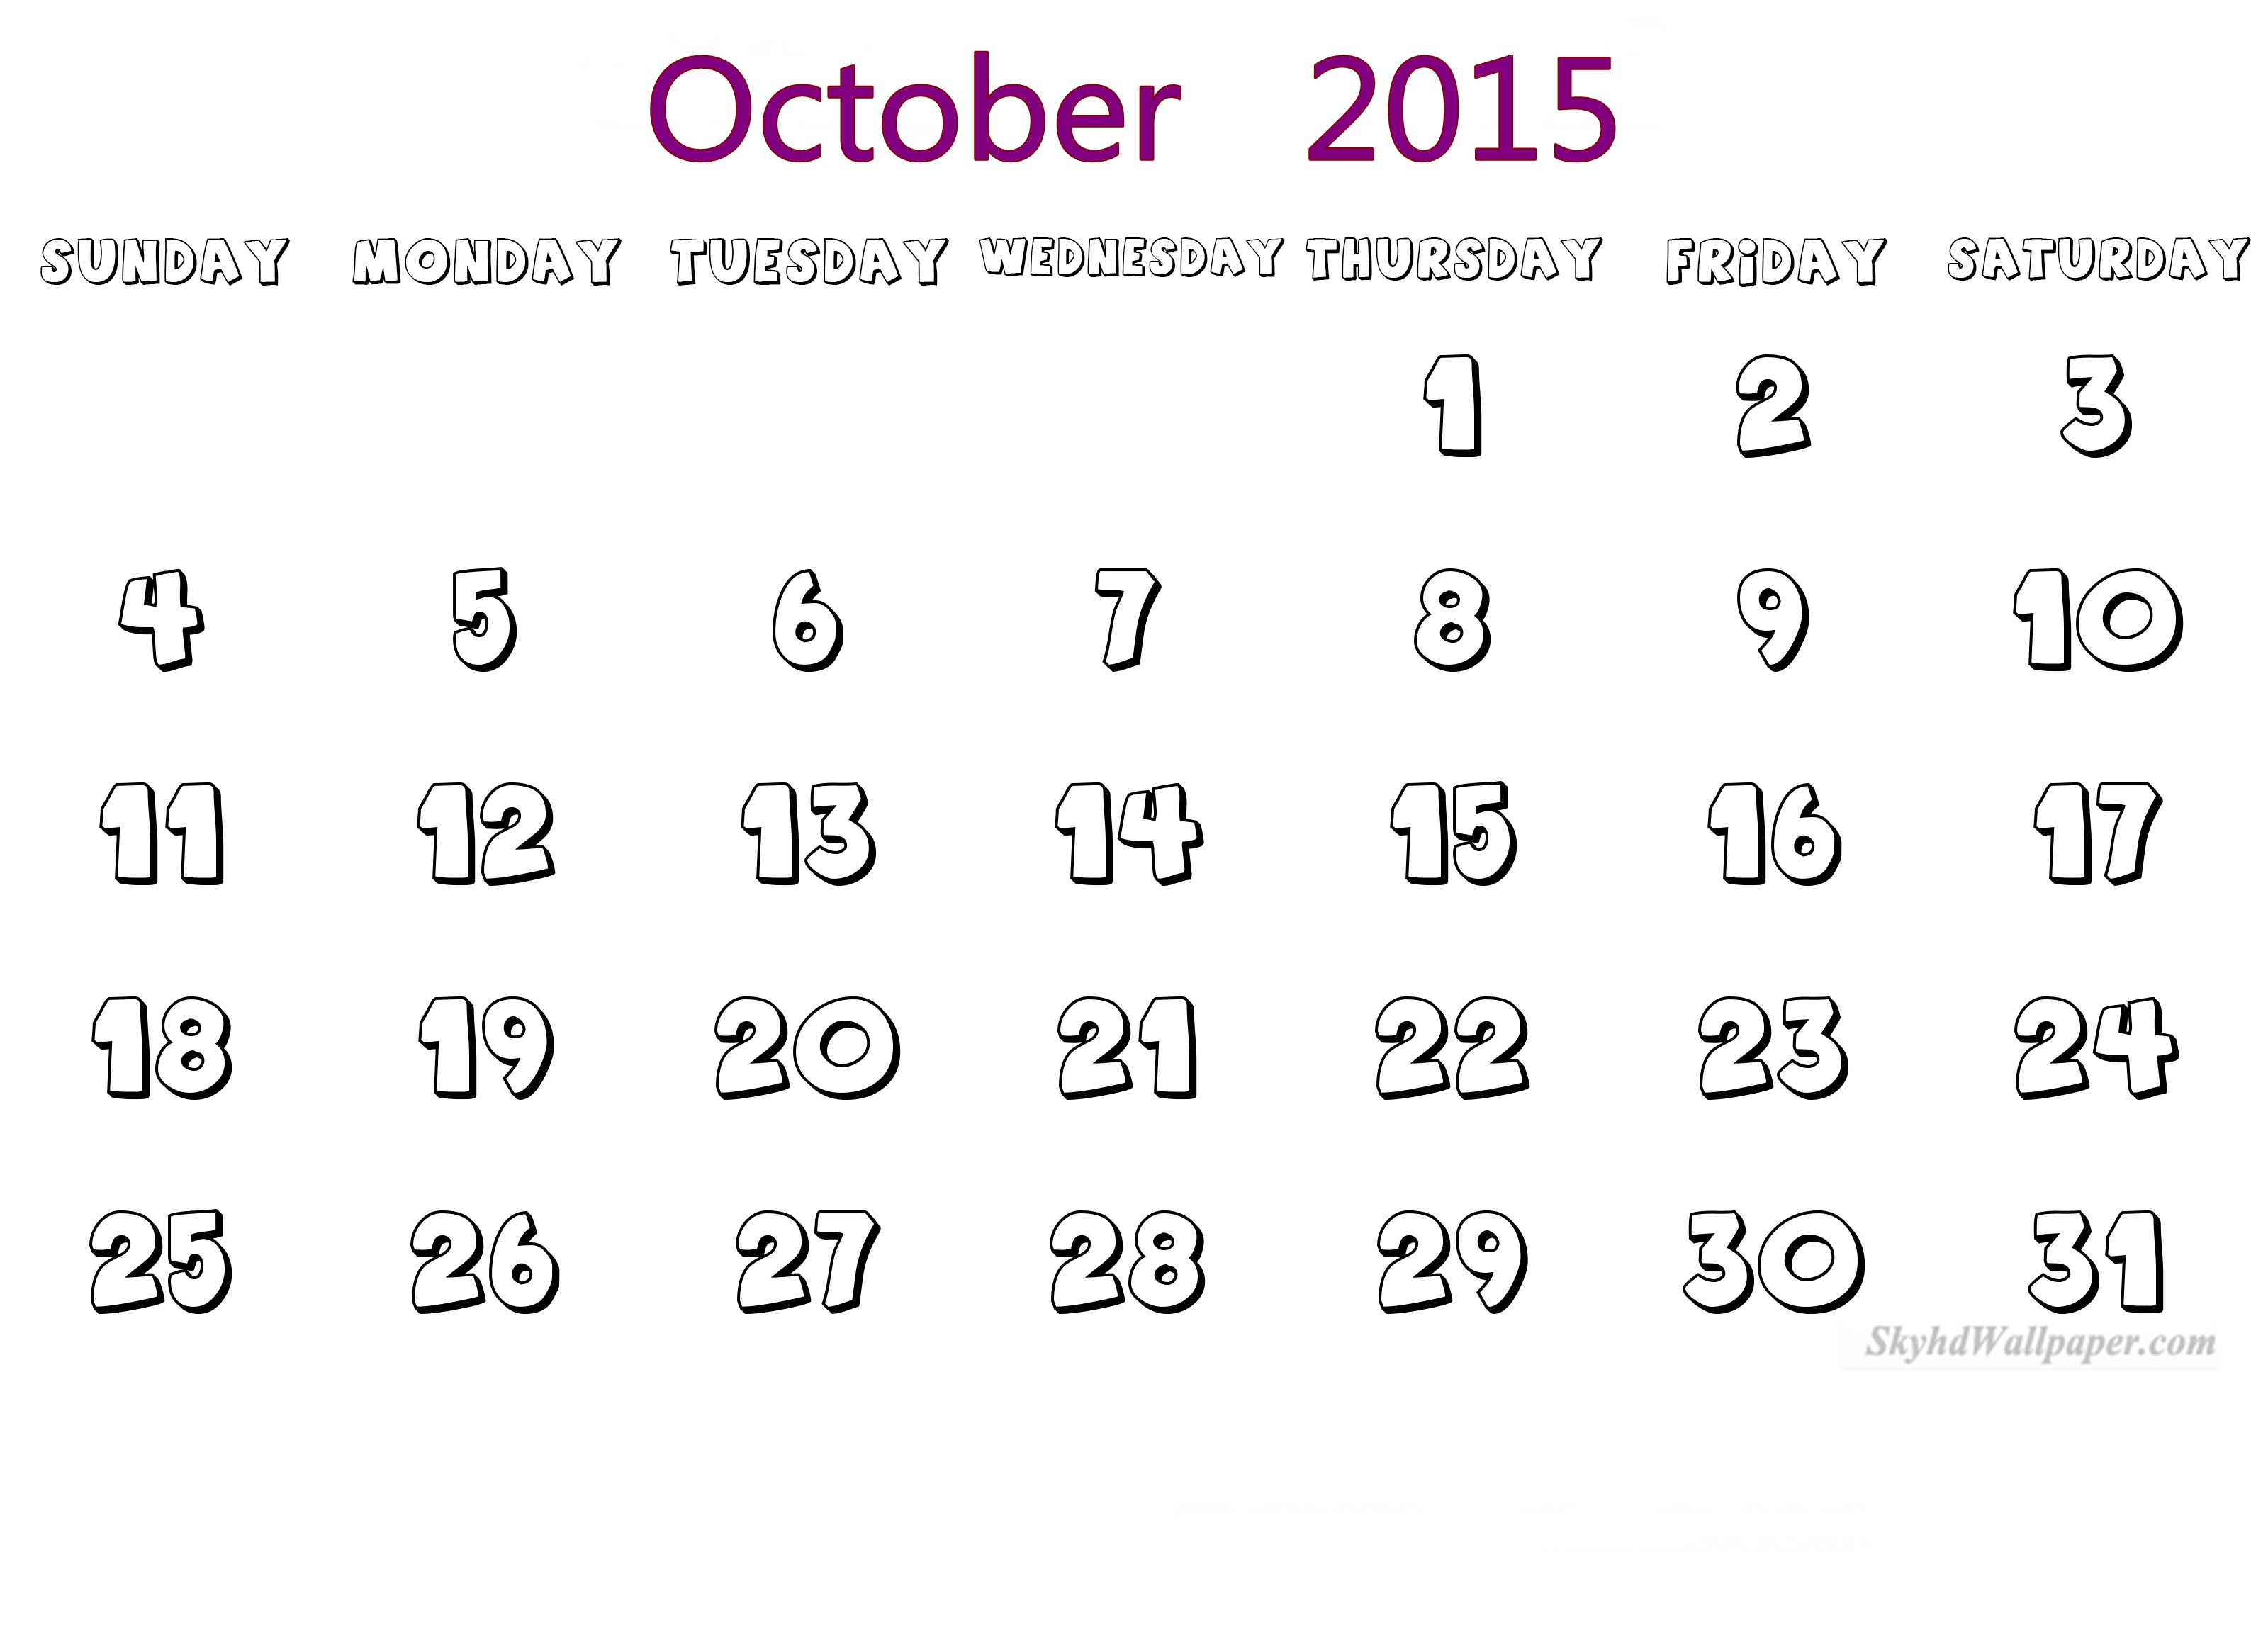 October Calendar Pic